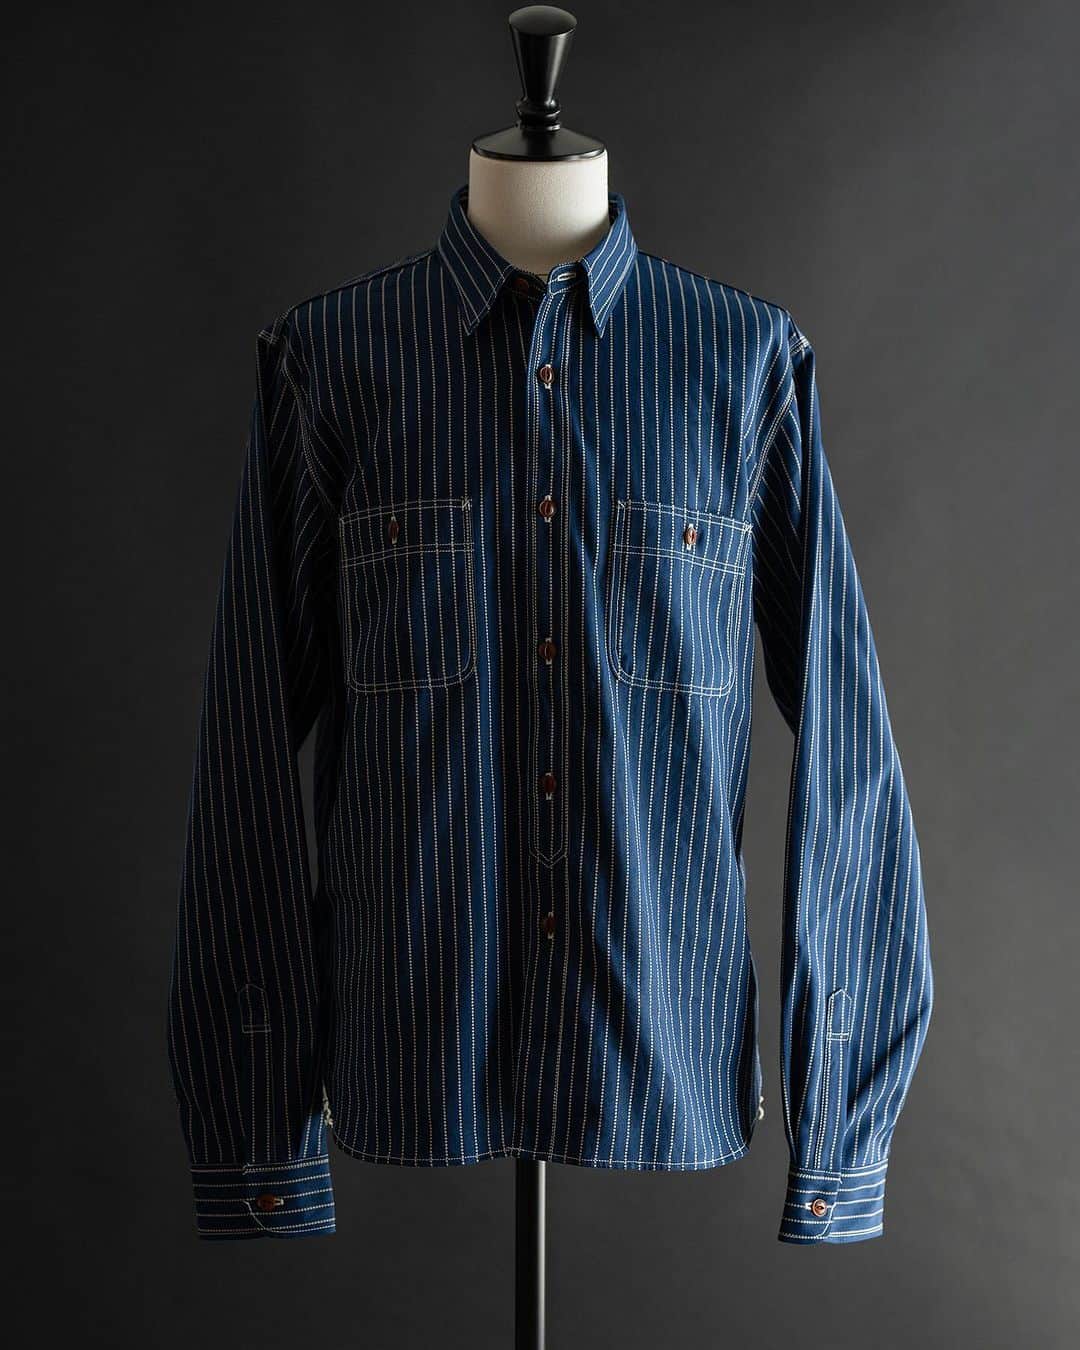 BIG JOHNのインスタグラム：「Selvage Chambray Shirts Wabash 岡山県井原市産のセルビッチシャンブレーを使用したワークシャツです。 昭和初期の力織機でゆっくり時間をかけて織った、5ozセルビッチシャンブレー。 インディゴで染められた生地に小さなドットの連続を抜染処理し、ストライプ柄を表現しております。 縫製はワークシャツ特有のトリプルステッチ仕様で、長く愛用いただけるように丈夫な作りになっております。 釦は南米の（タグワヤシ）の木から自然に落ちる実を丁寧に研磨し、仕上げたNutボタンを使用しました。ひとつひとつ異なる美しい柄もお楽しみください。  MS003R-055P 17,600円（税込）  matsu  @bigjohnjeans  @bigjohnshop  @bigjohntokyo  @bigjohnosaka  #bigjohn #bigjohnjeans #ビッグジョン #okayama #kurashiki #kojima #ジーンズ #デニム #denim #fashion #ootd #jeans #love #madeinjapan  #japan  #model #シャンブレーシャツ #アメカジ  #伝統 #革新#国産 #セルビッチシャンブレー #shambrayshirt#wabash」